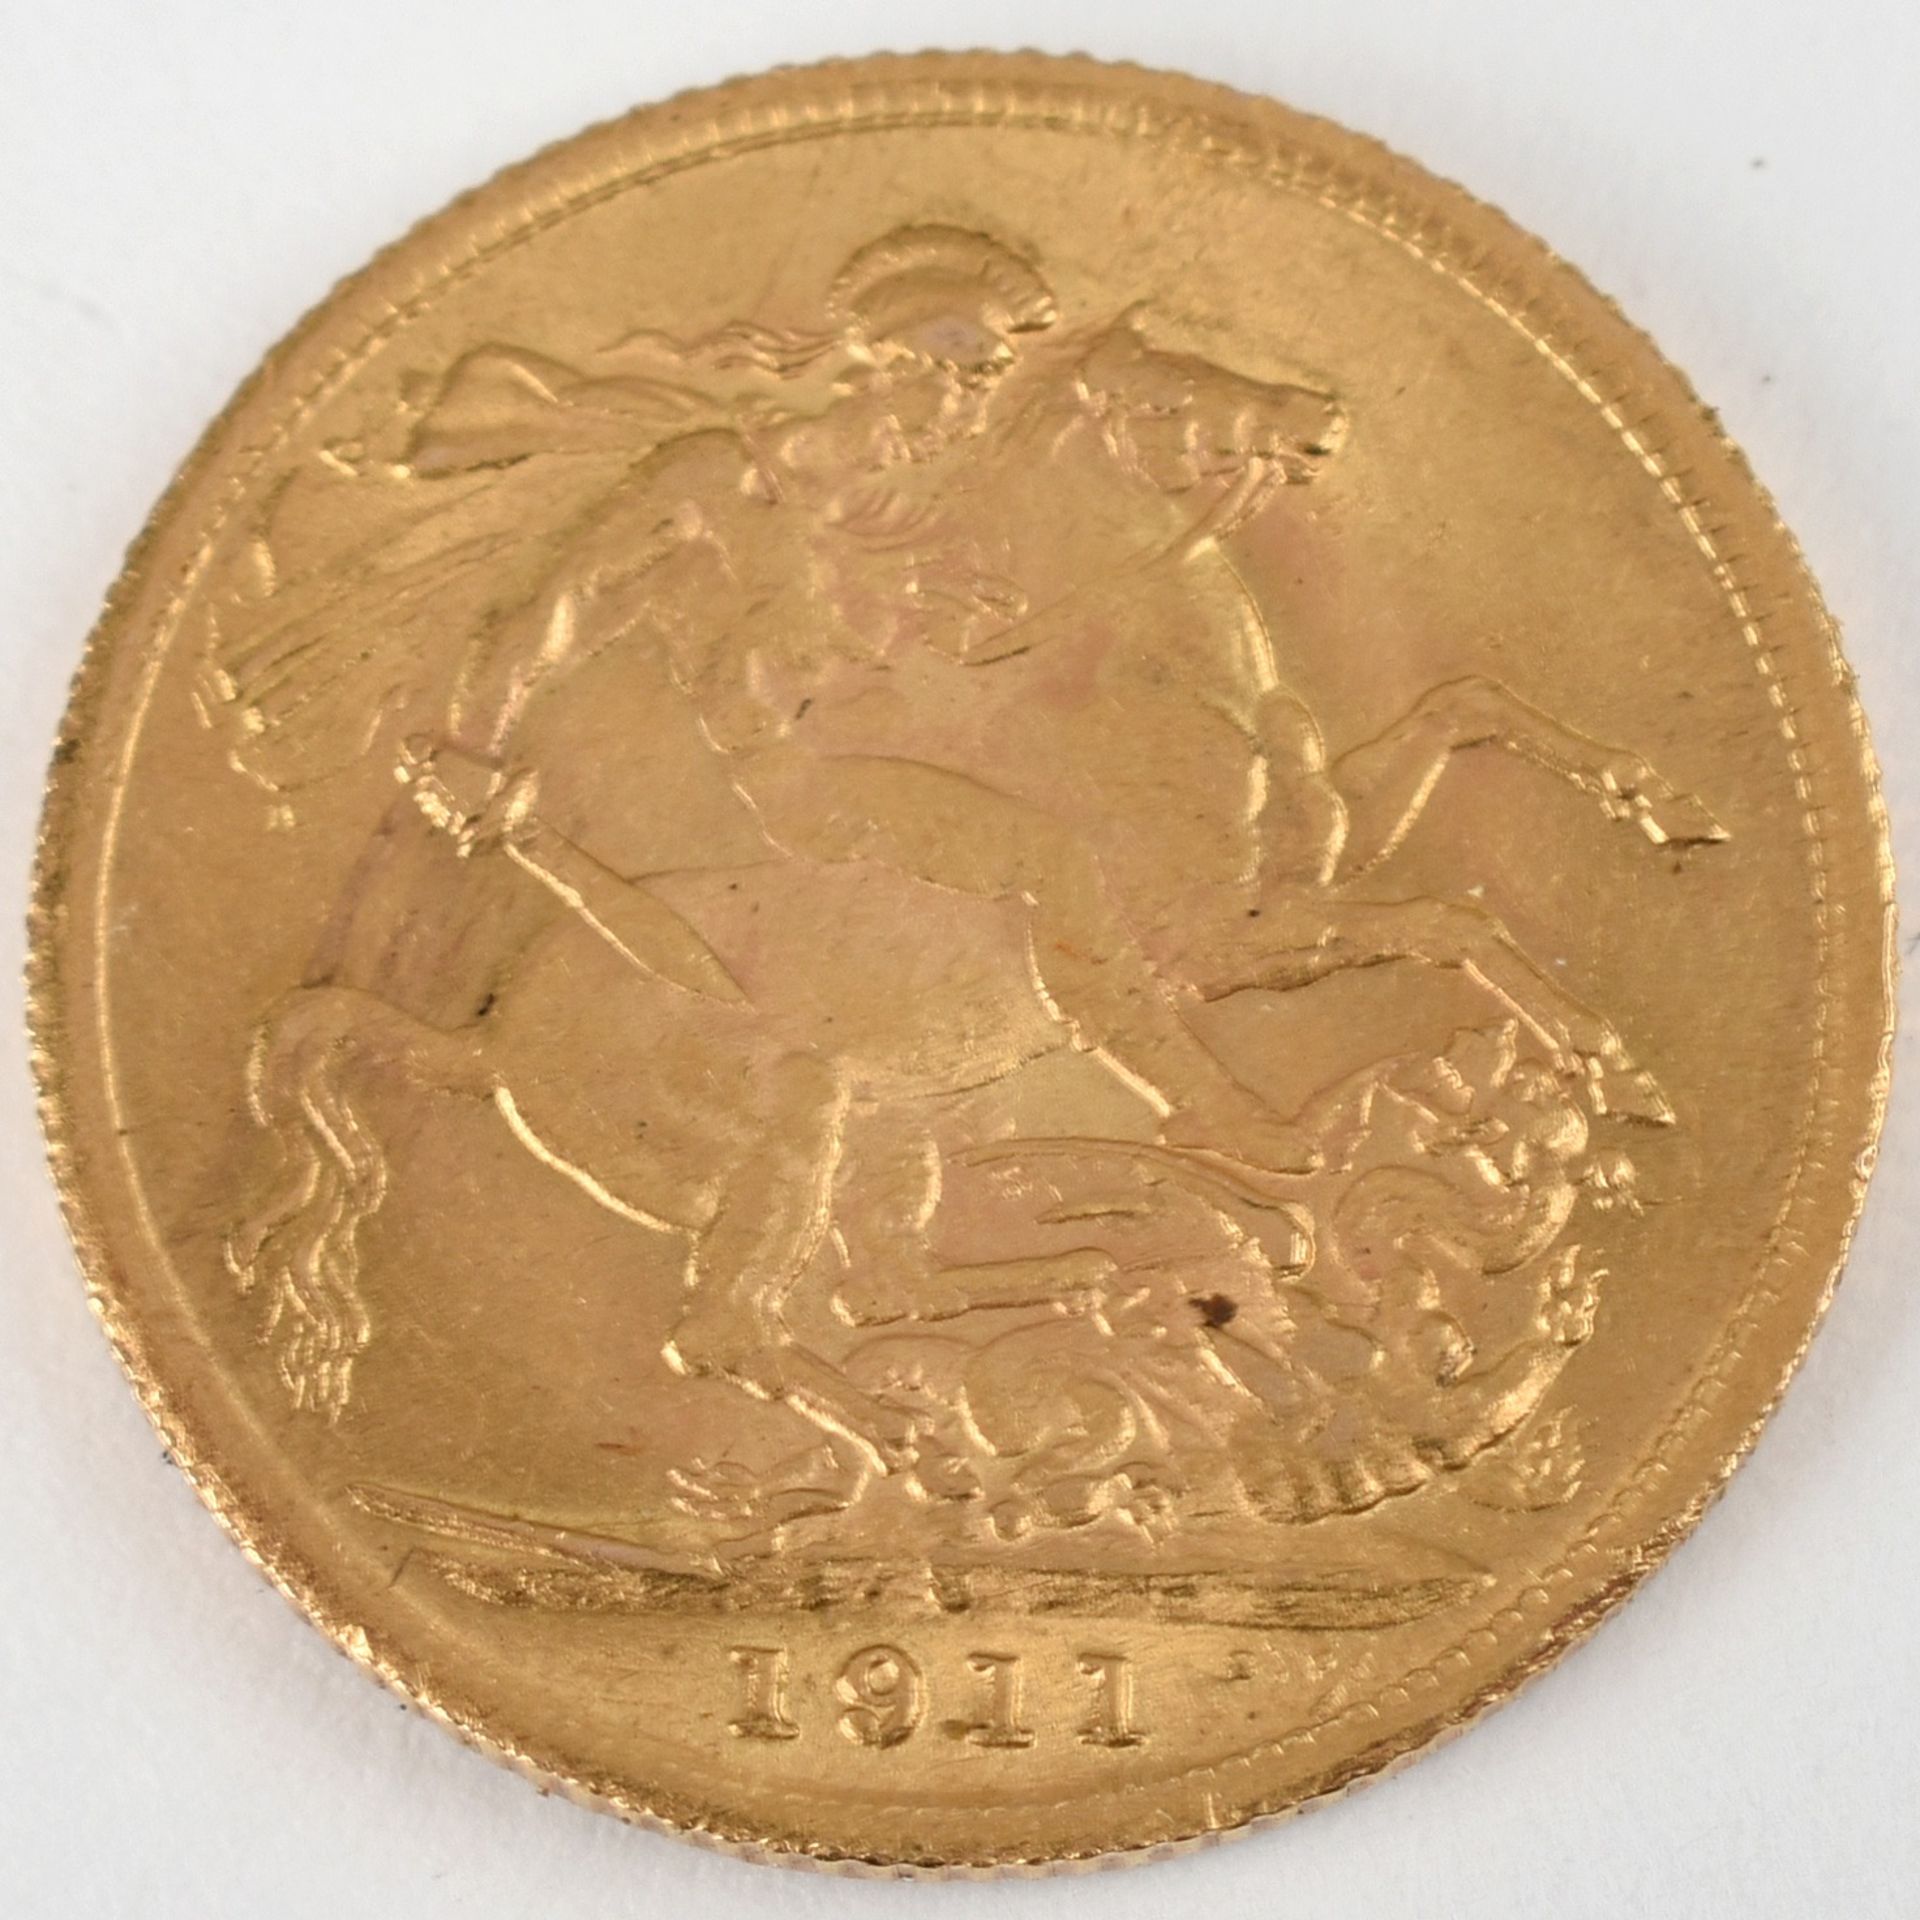 Goldmünze Großbritannien 1911 Sovereign in Gold, 916/1000, 7,988 g, D ca. 22 mm, av. König George V. - Bild 3 aus 3